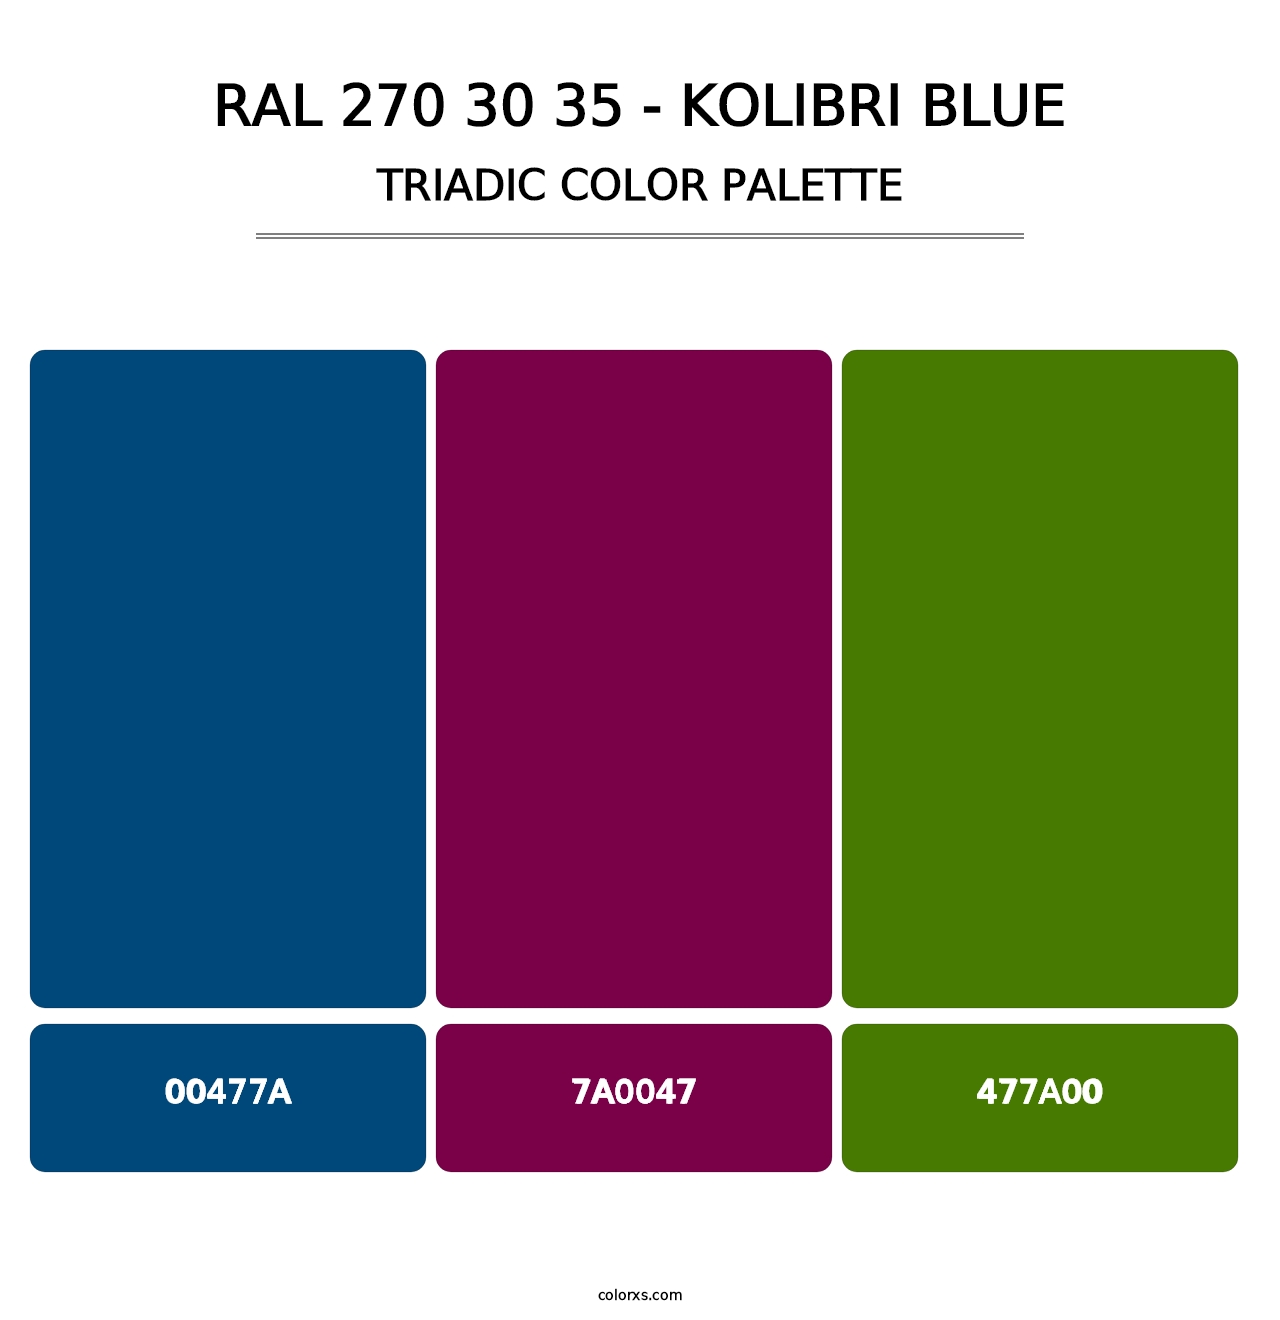 RAL 270 30 35 - Kolibri Blue - Triadic Color Palette